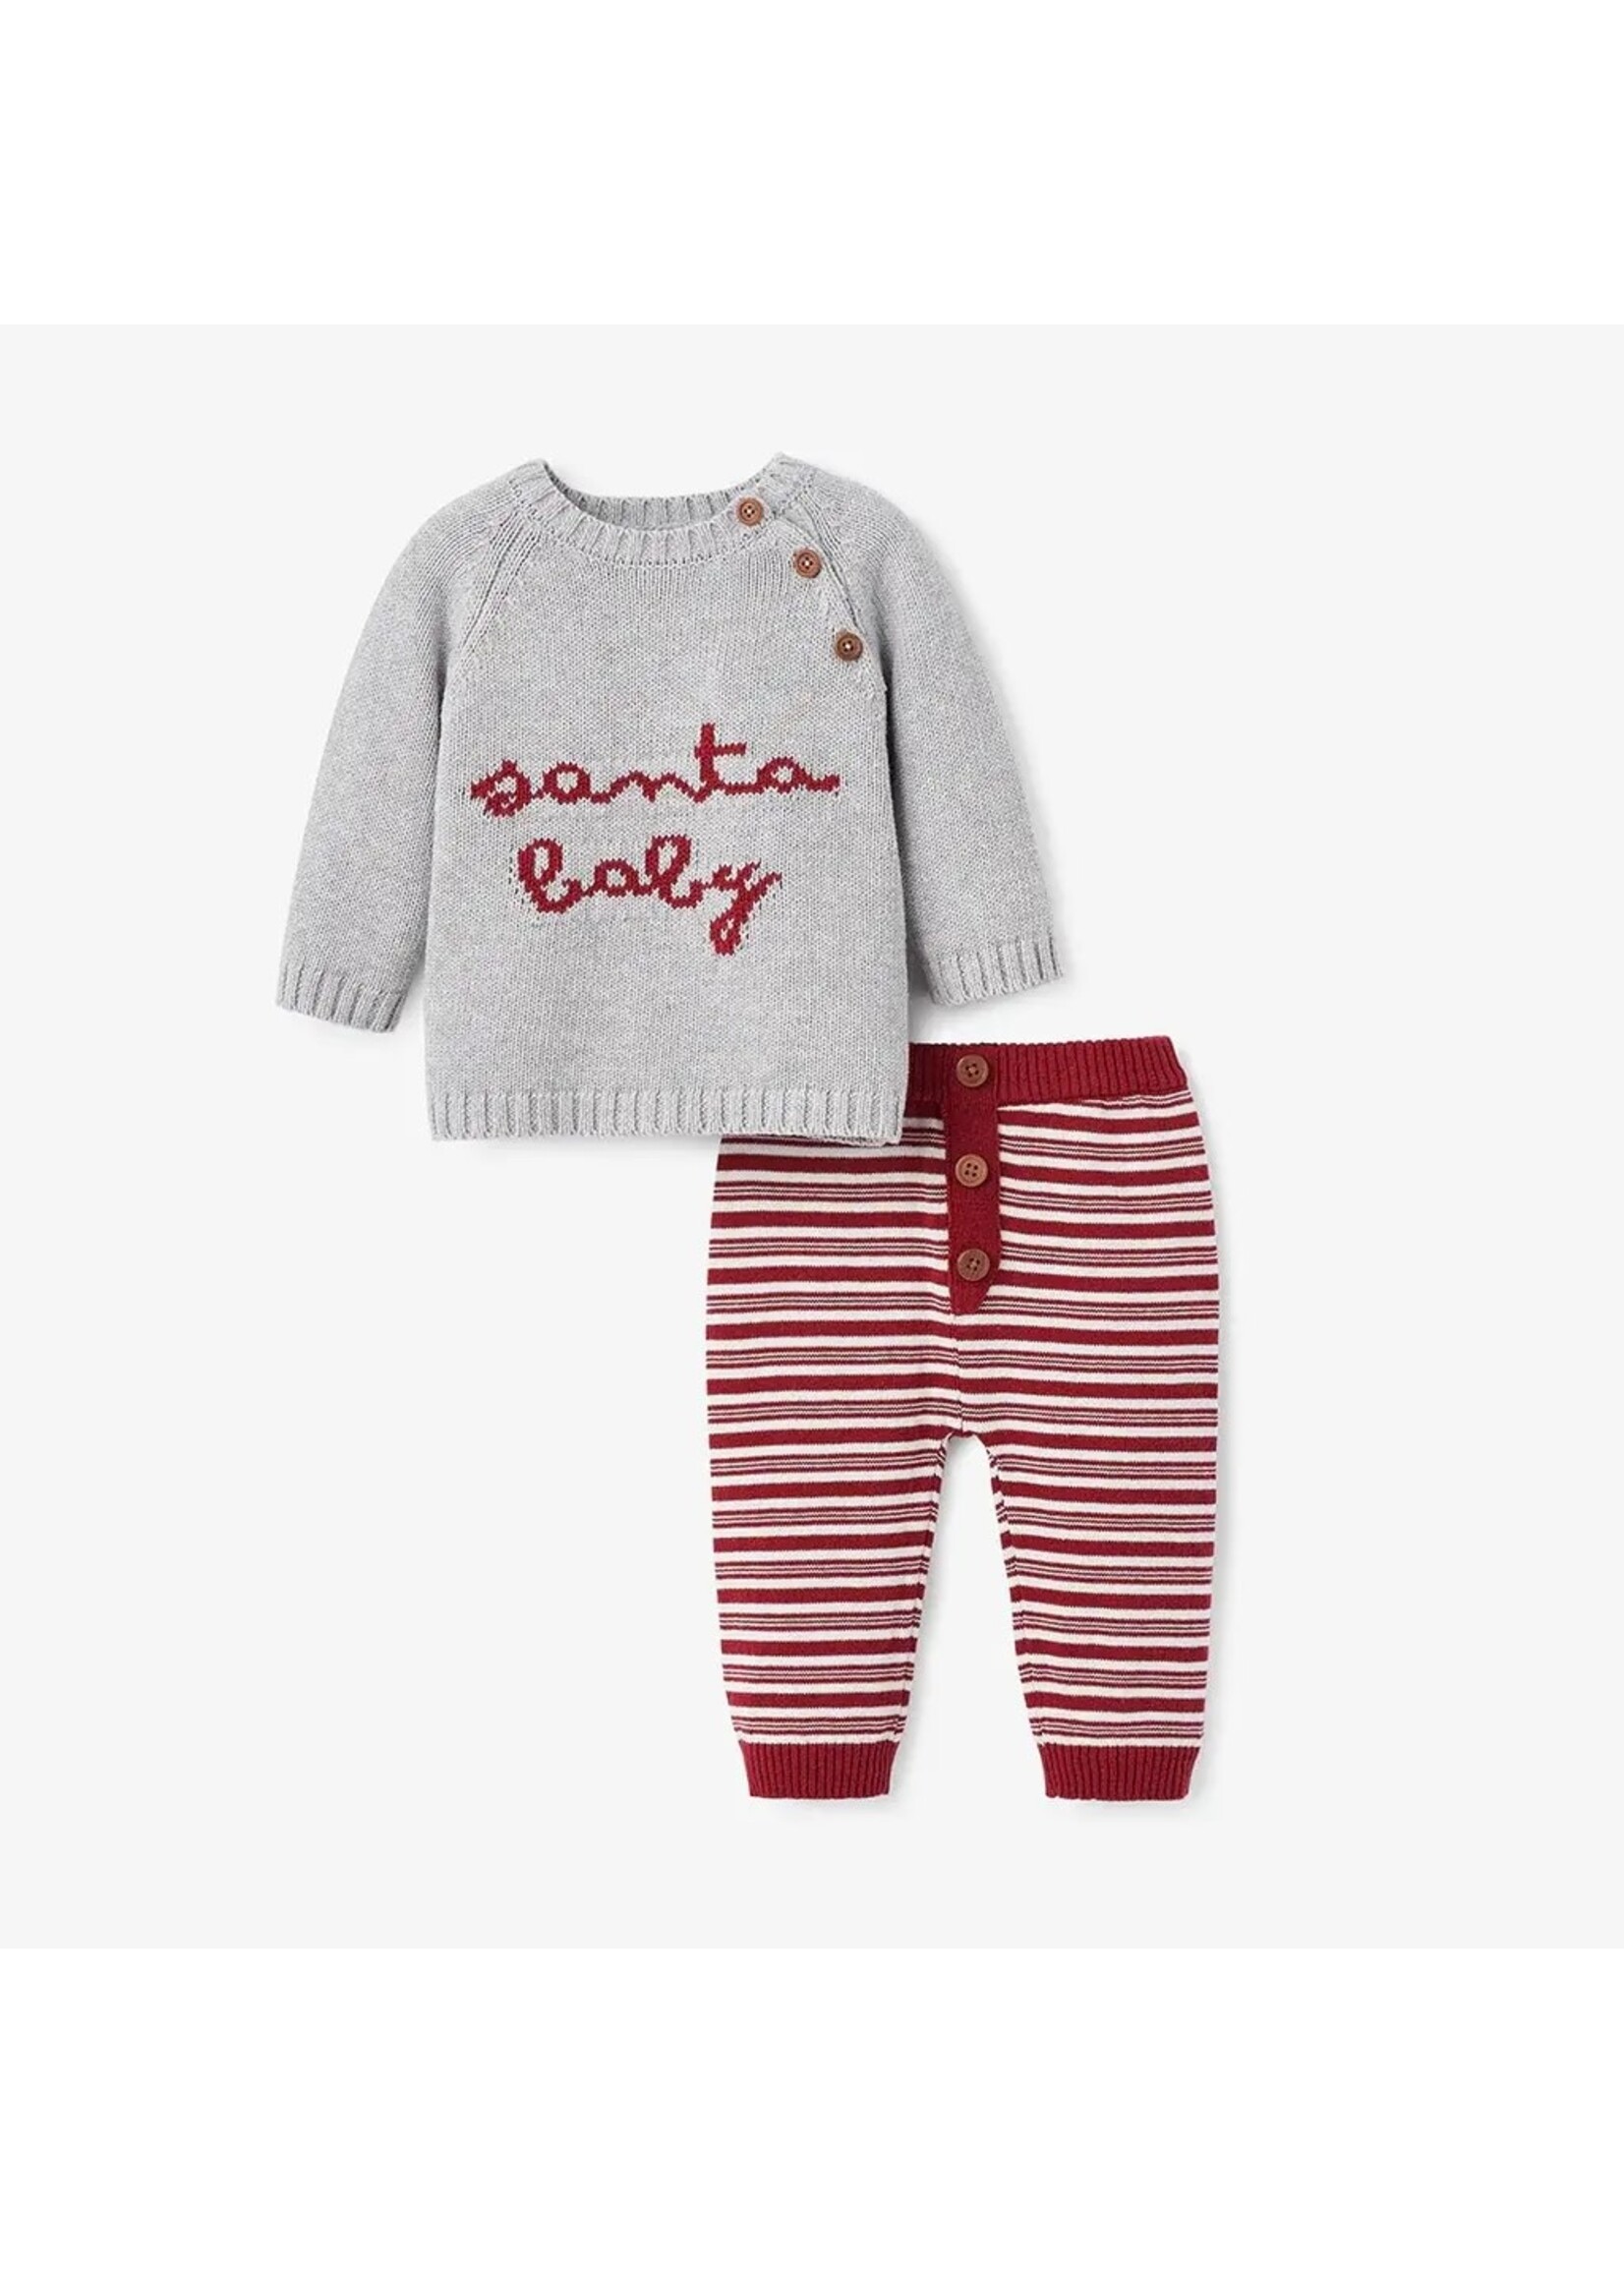 Sweater Pant Set Santa